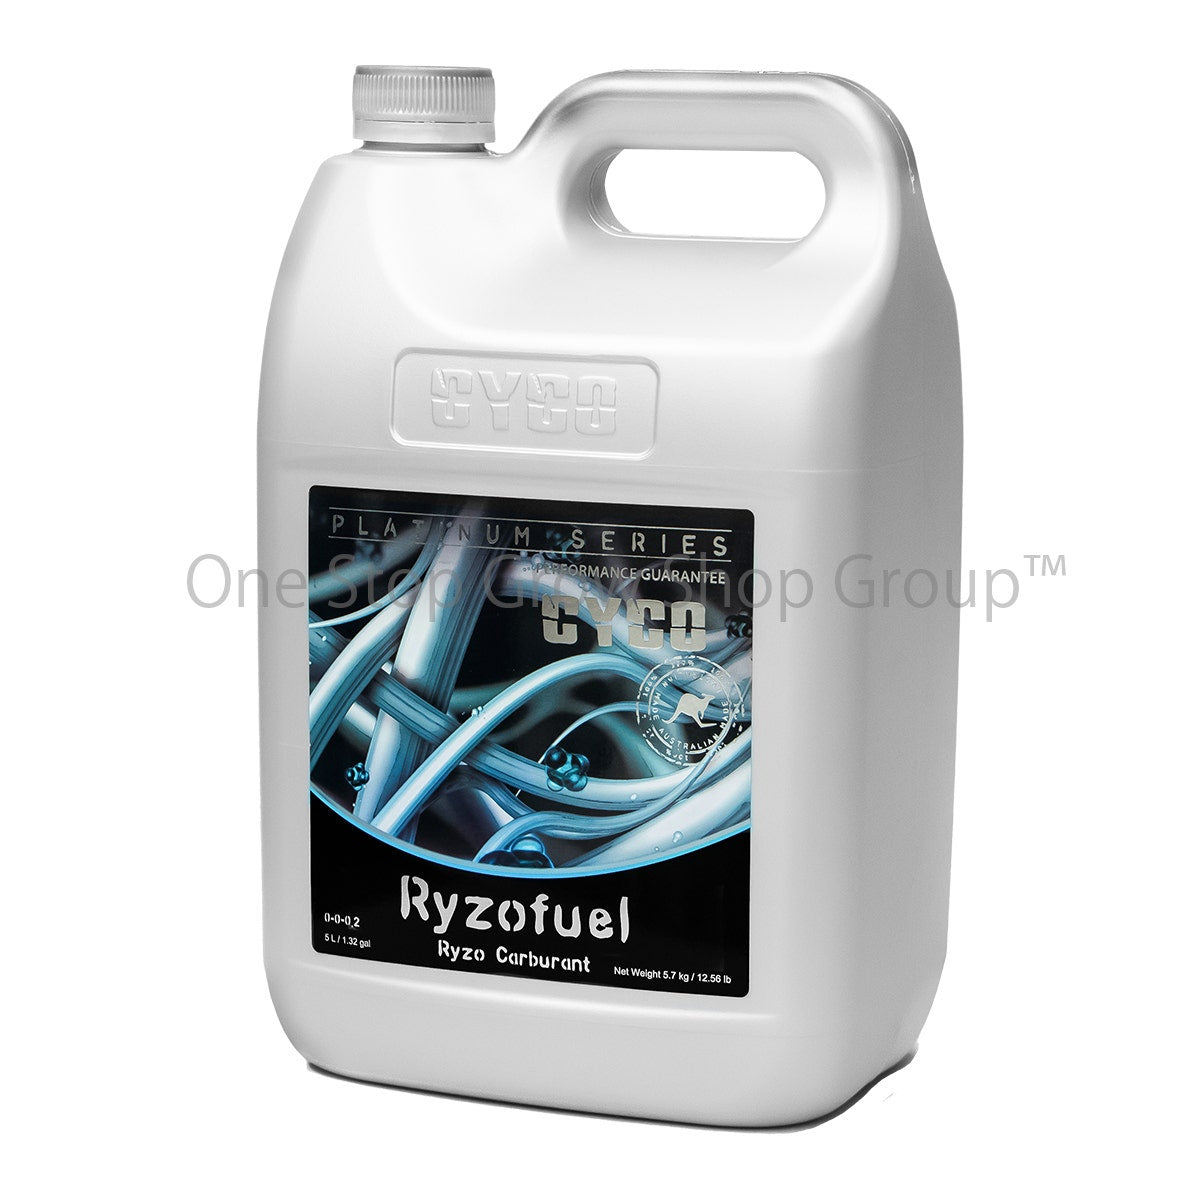 Cyco Nutrients - Platinum Series - Ryzofuel